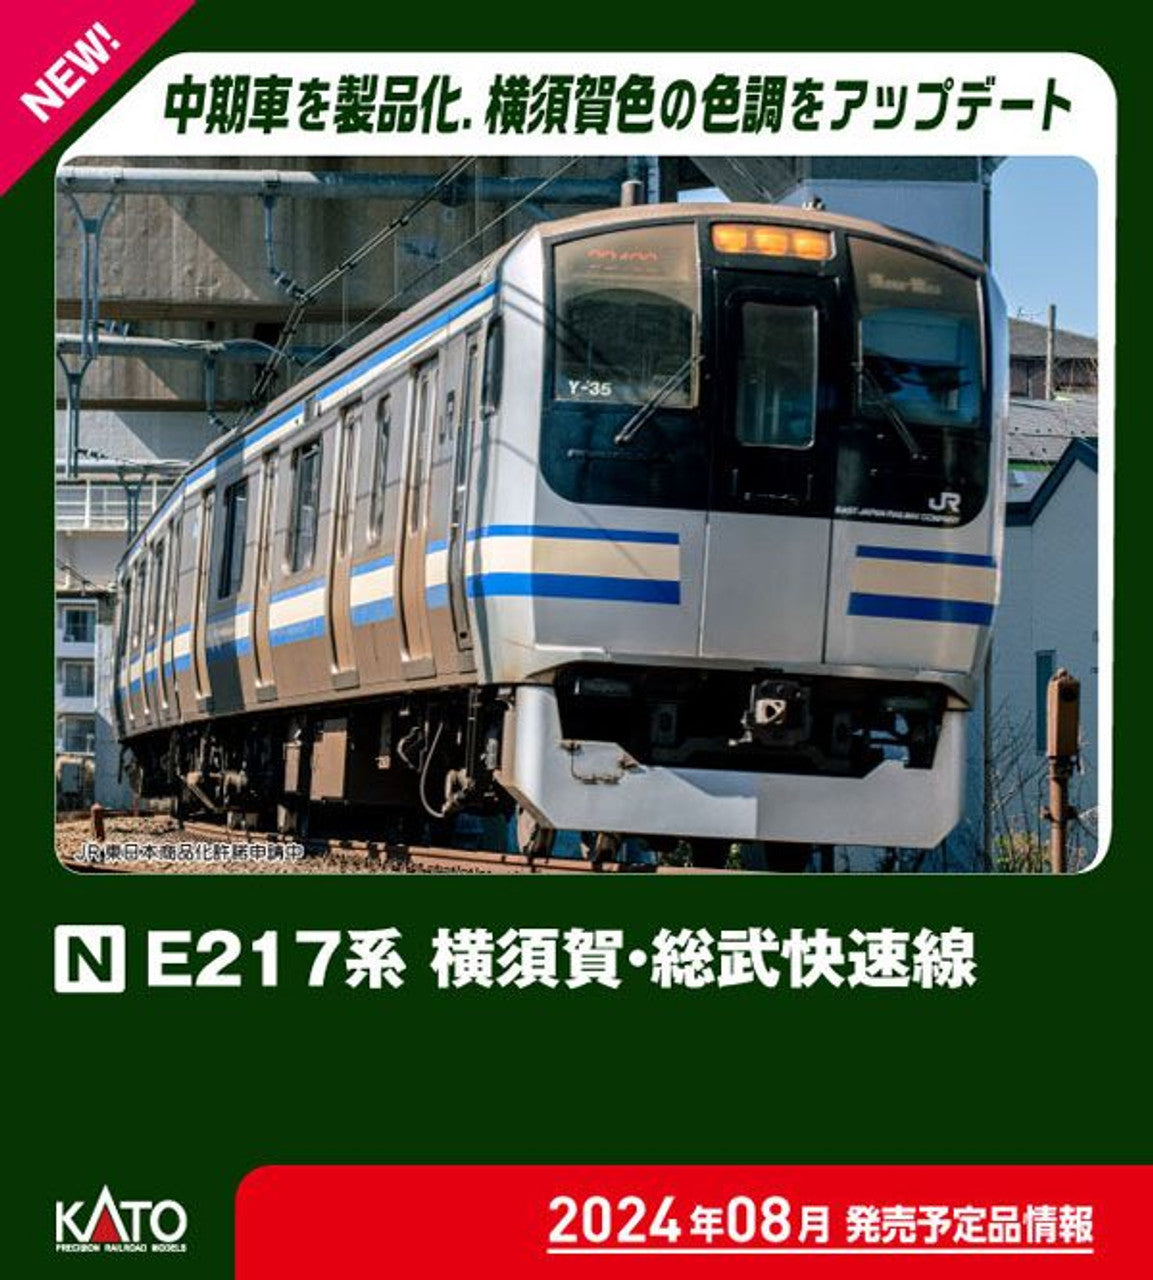 Kato [PO AUG 204] 10-1977 Series E217 Yokosuka/Sobu Rapid Line 8 Cars Set (N scale) - BanzaiHobby